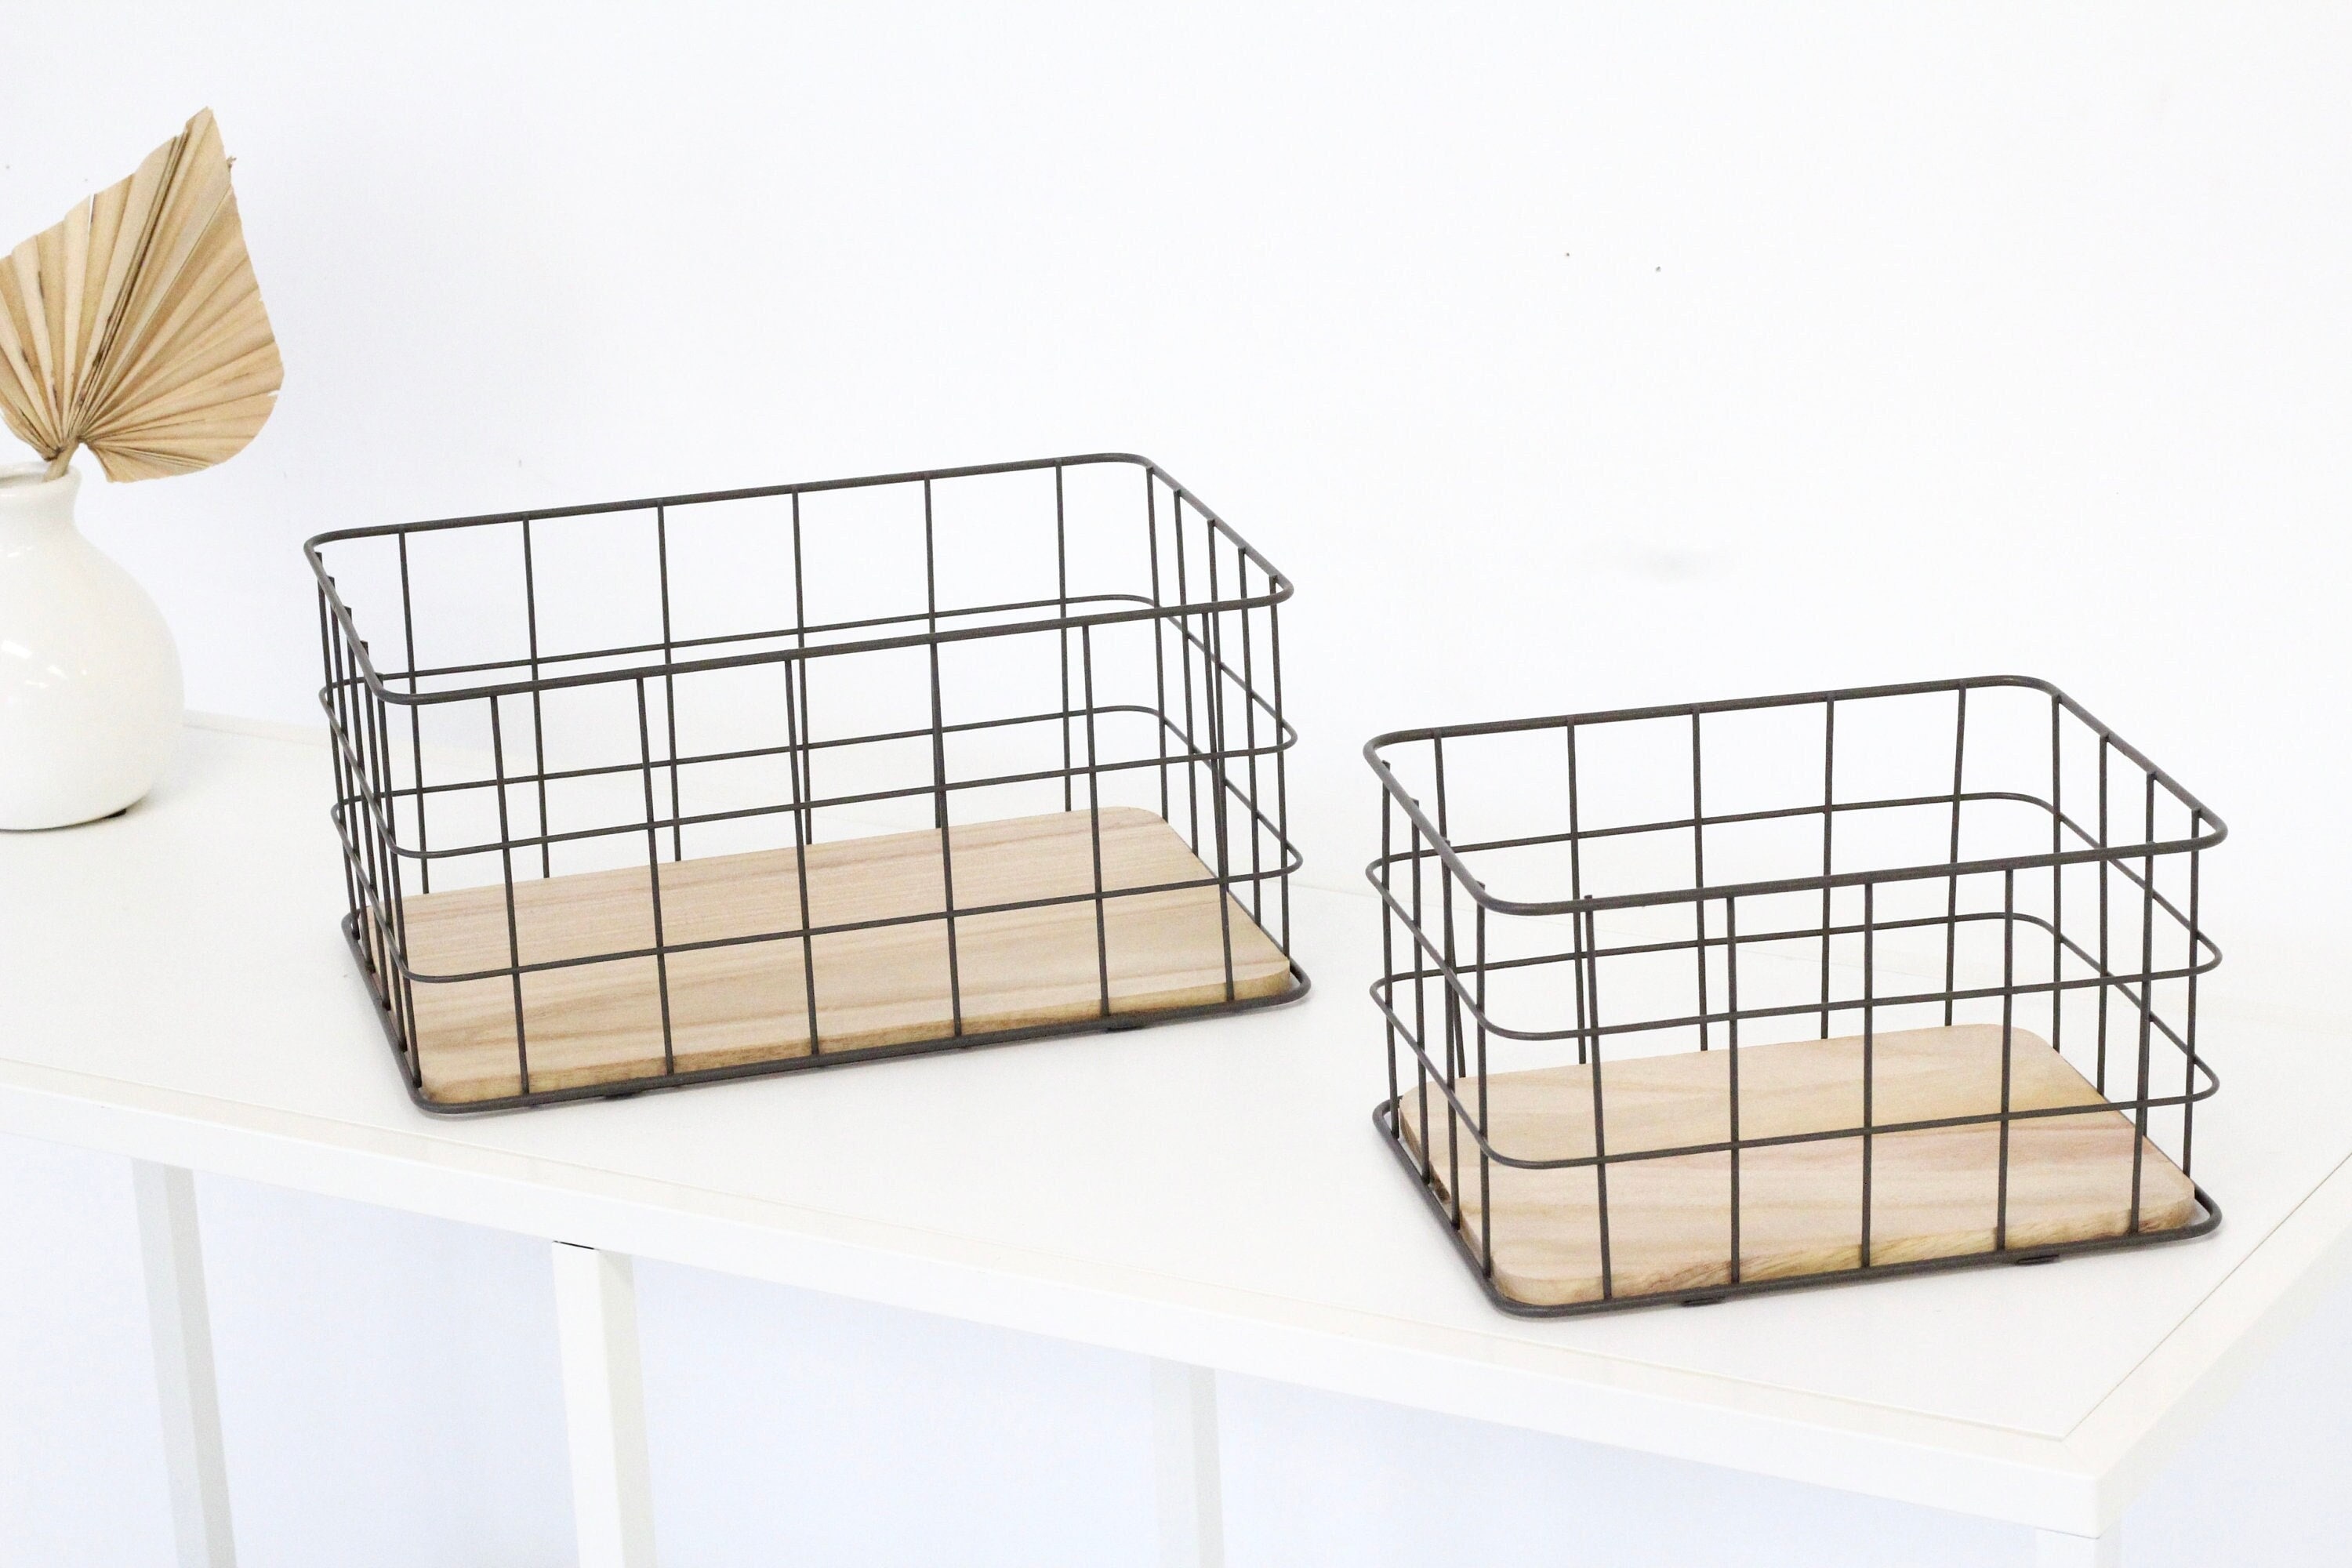  Qcold Metal Wire Basket Storage, Bathroom Basket for  Organizing, Bathroom Counter Organizer with Wooden Handles, Farmhouse  Bathroom Decor Tray, Toilet Paper Basket Storage (Set of 3, Black) : Home &  Kitchen